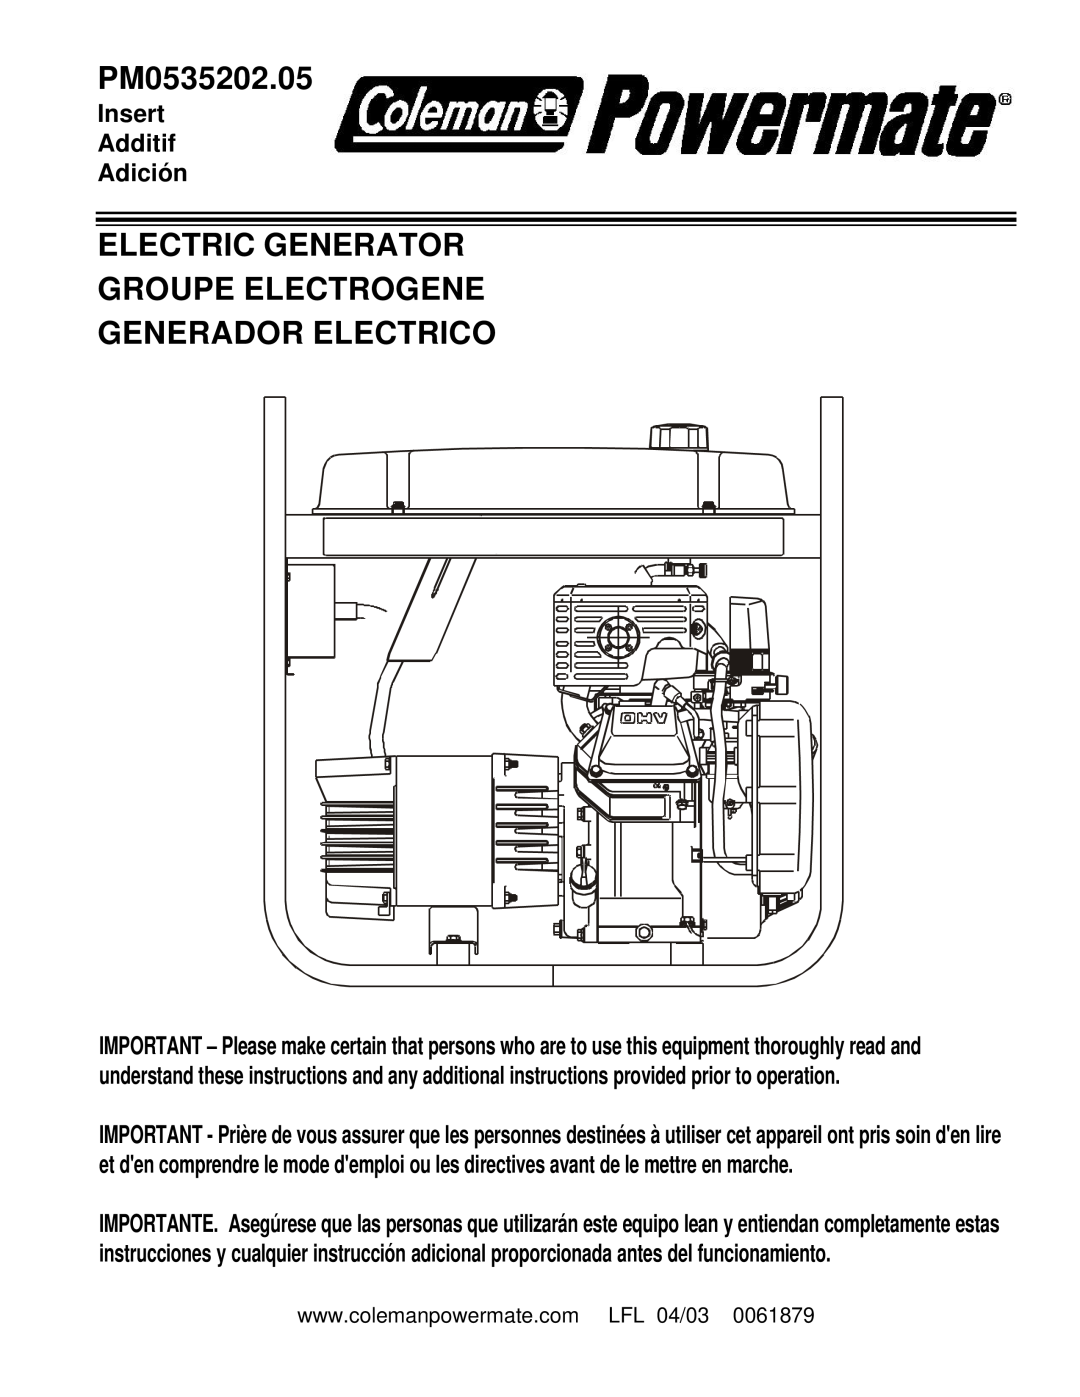 Powermate PM0535202.05 manual Electric Generator Groupe Electrogene, Generador Electrico, Insert Additif Adición 